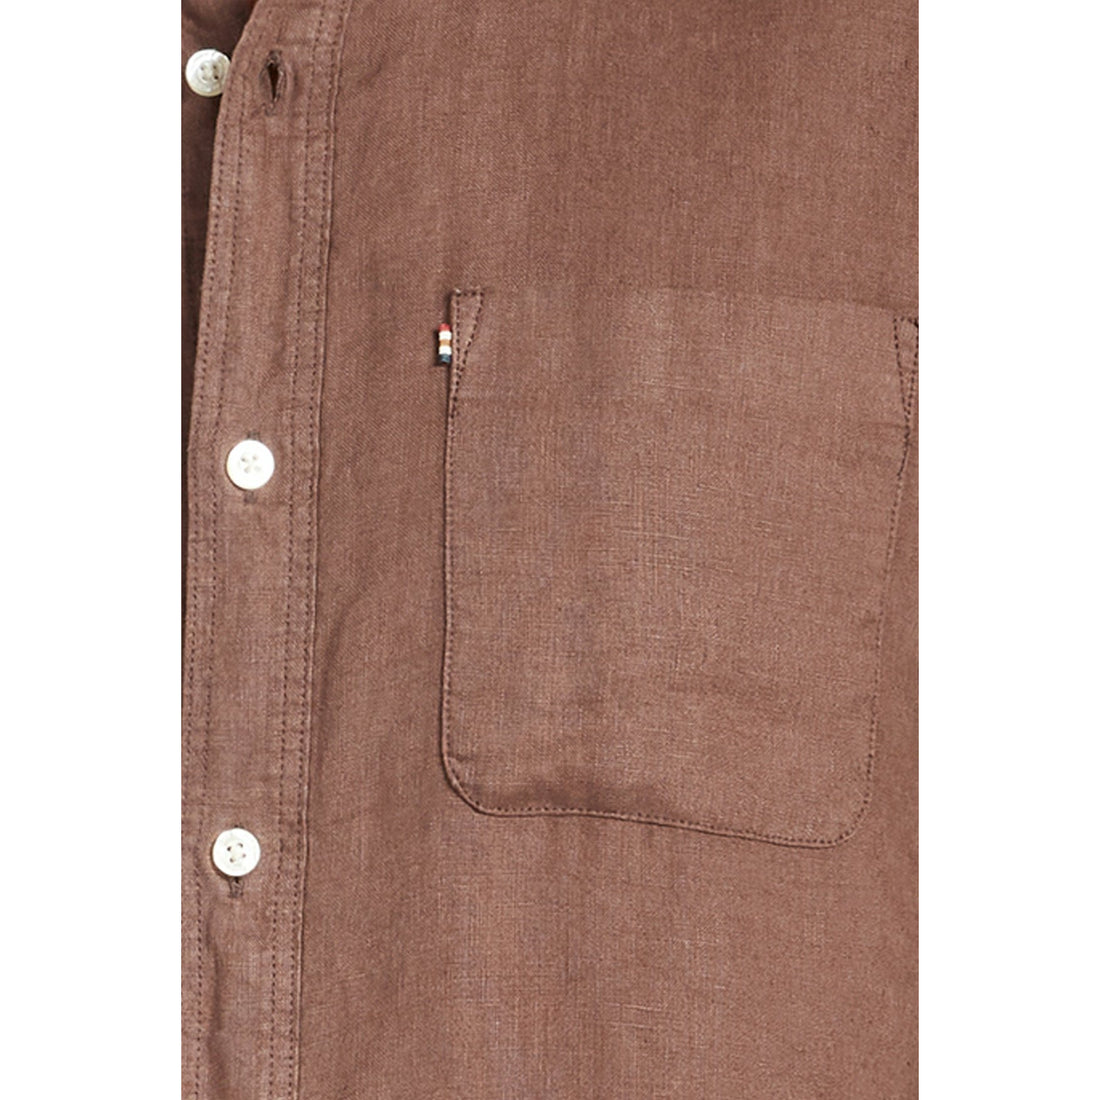 The Academy Brand Hampton L/S Linen Shirt - Bison